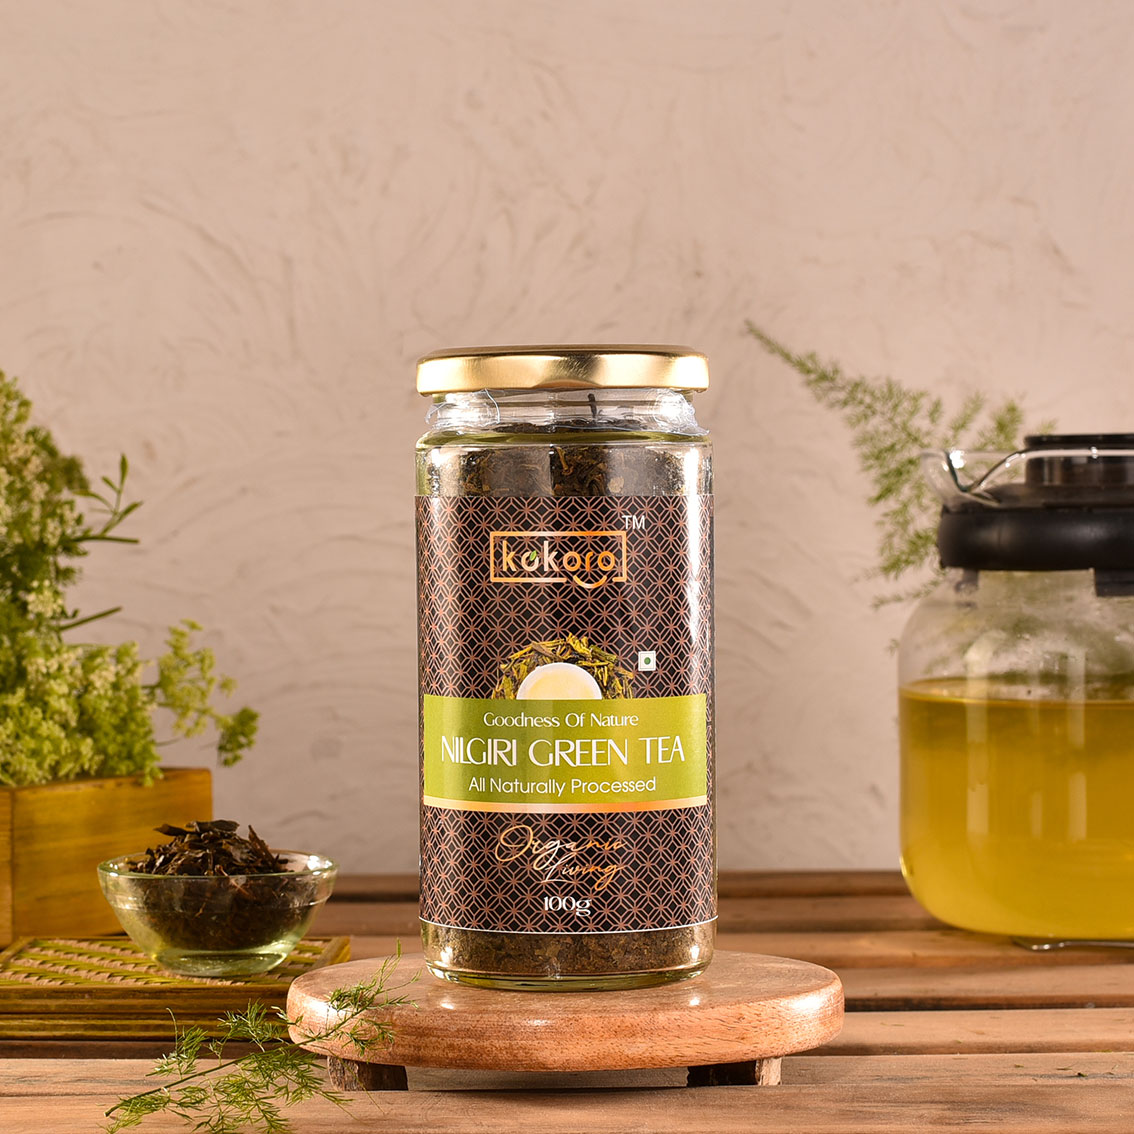 Nilgiri Green Tea packaging design